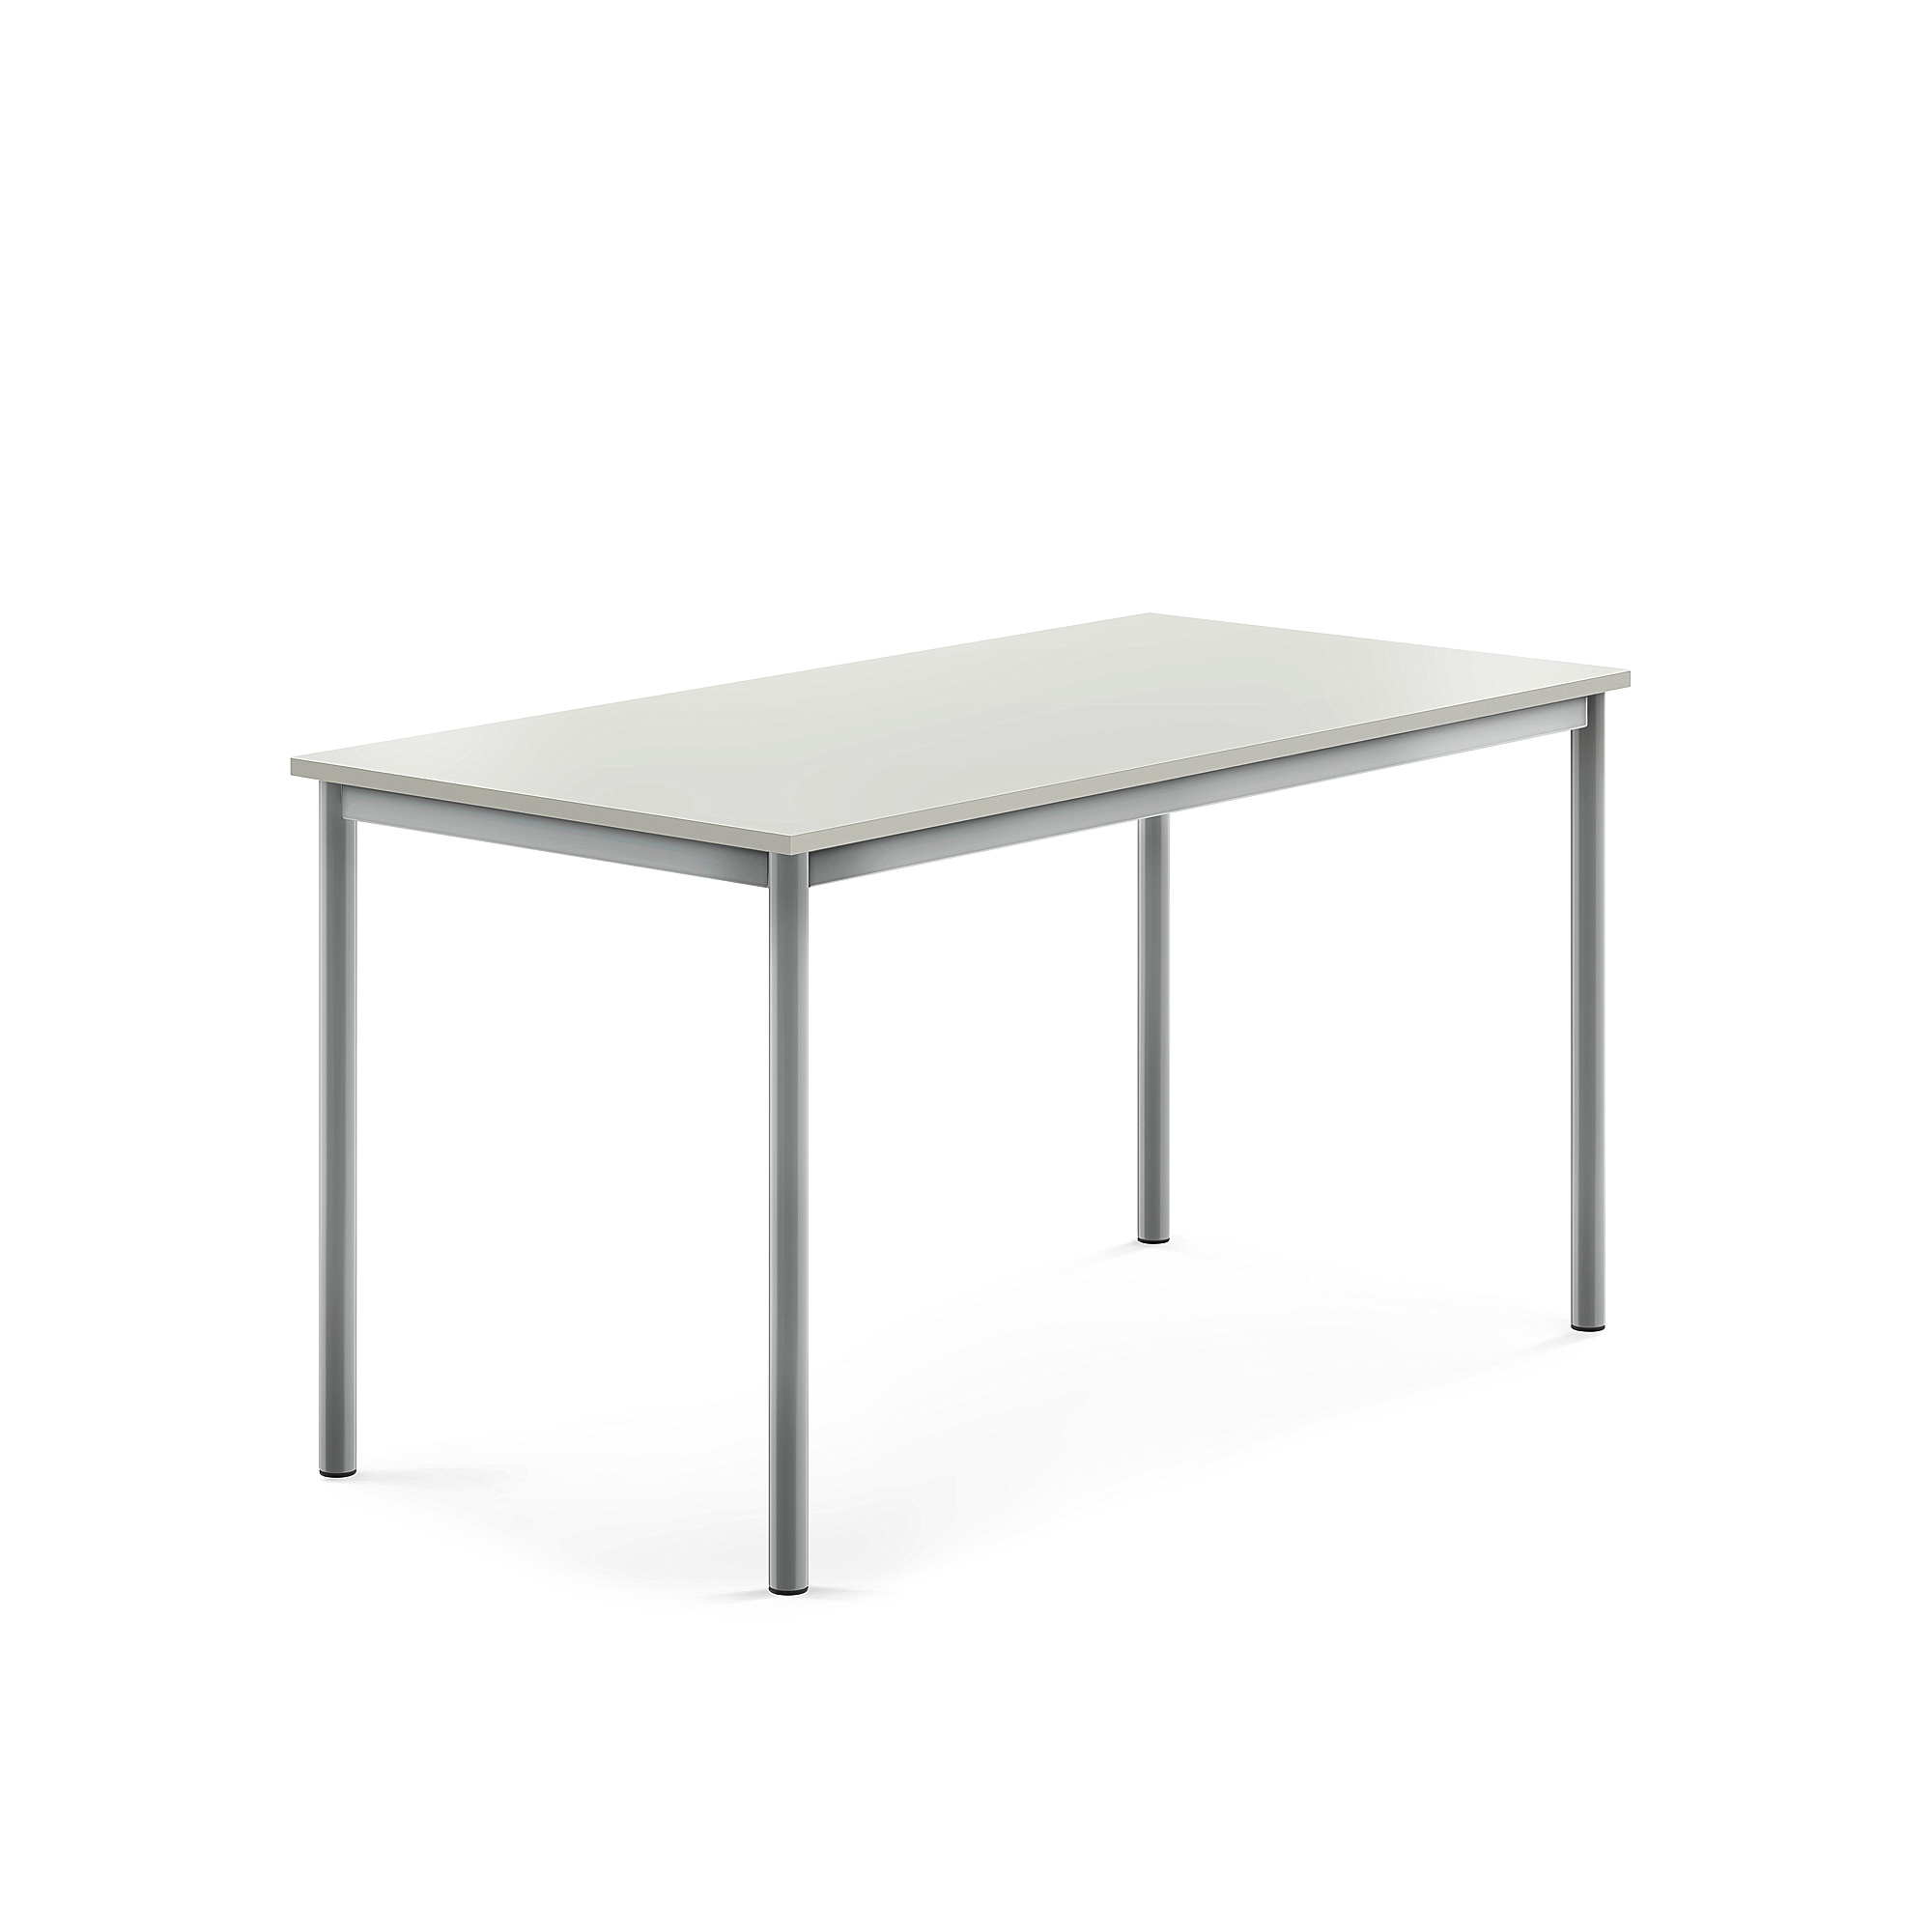 Stůl SONITUS, 1400x700x720 mm, stříbrné nohy, HPL deska tlumící hluk, šedá